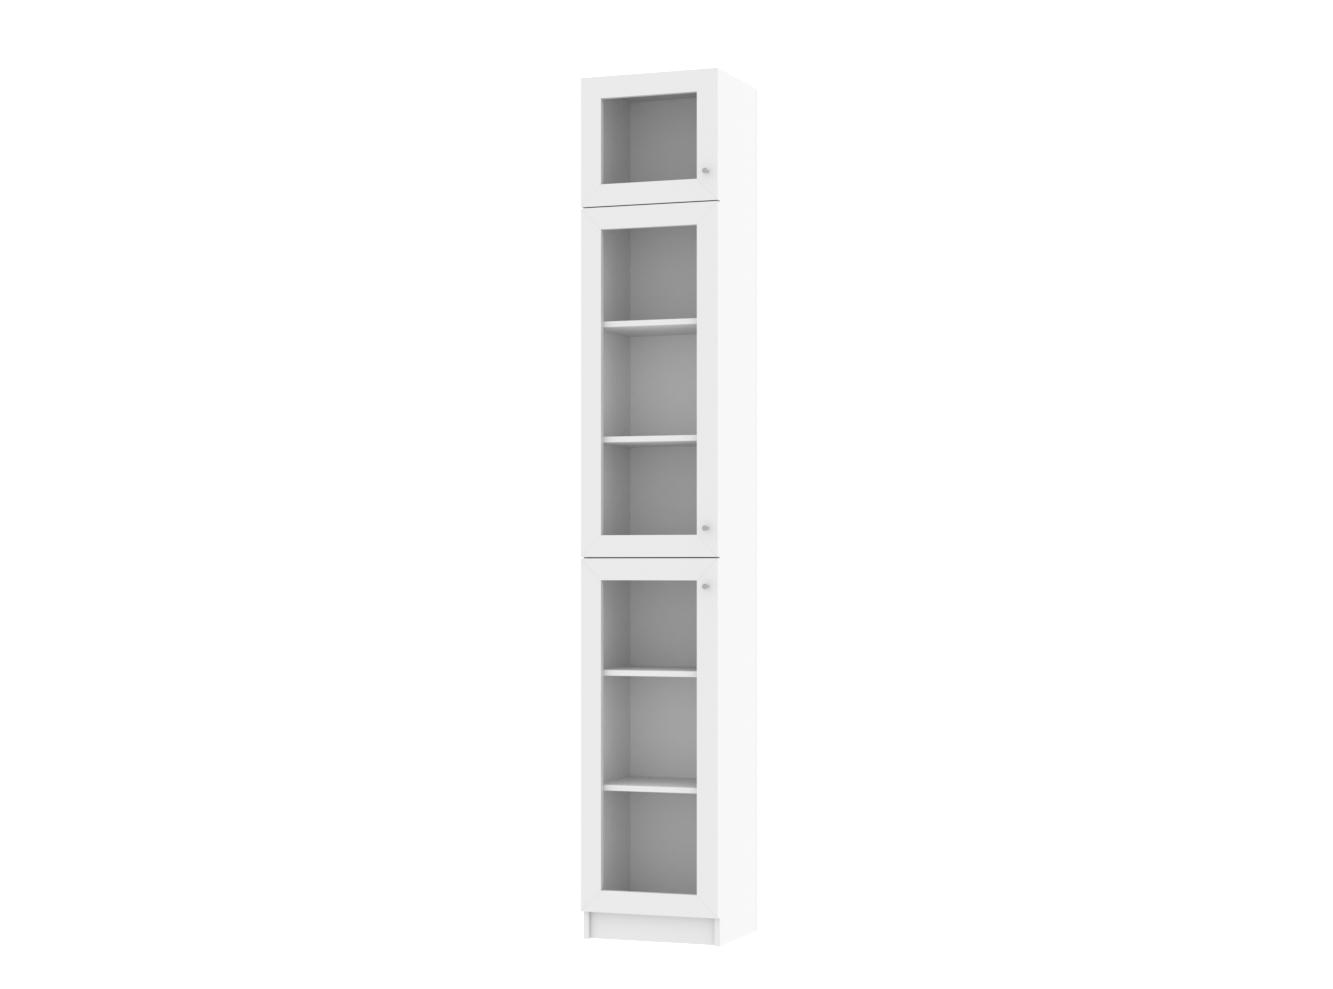  Книжный шкаф Билли 381 white ИКЕА (IKEA) изображение товара